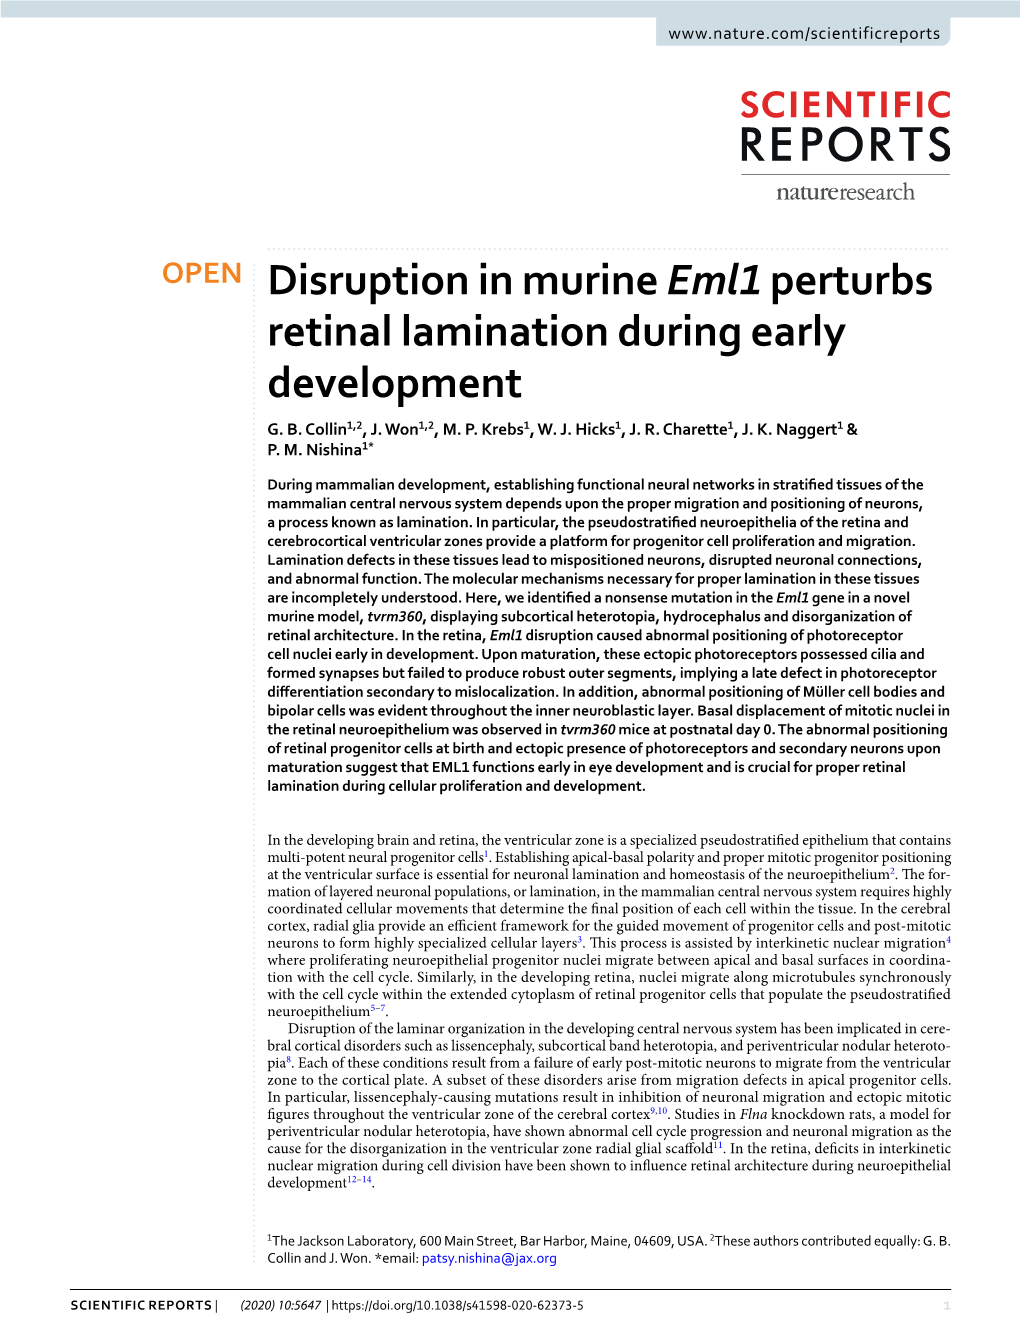 Disruption in Murine Eml1 Perturbs Retinal Lamination During Early Development G